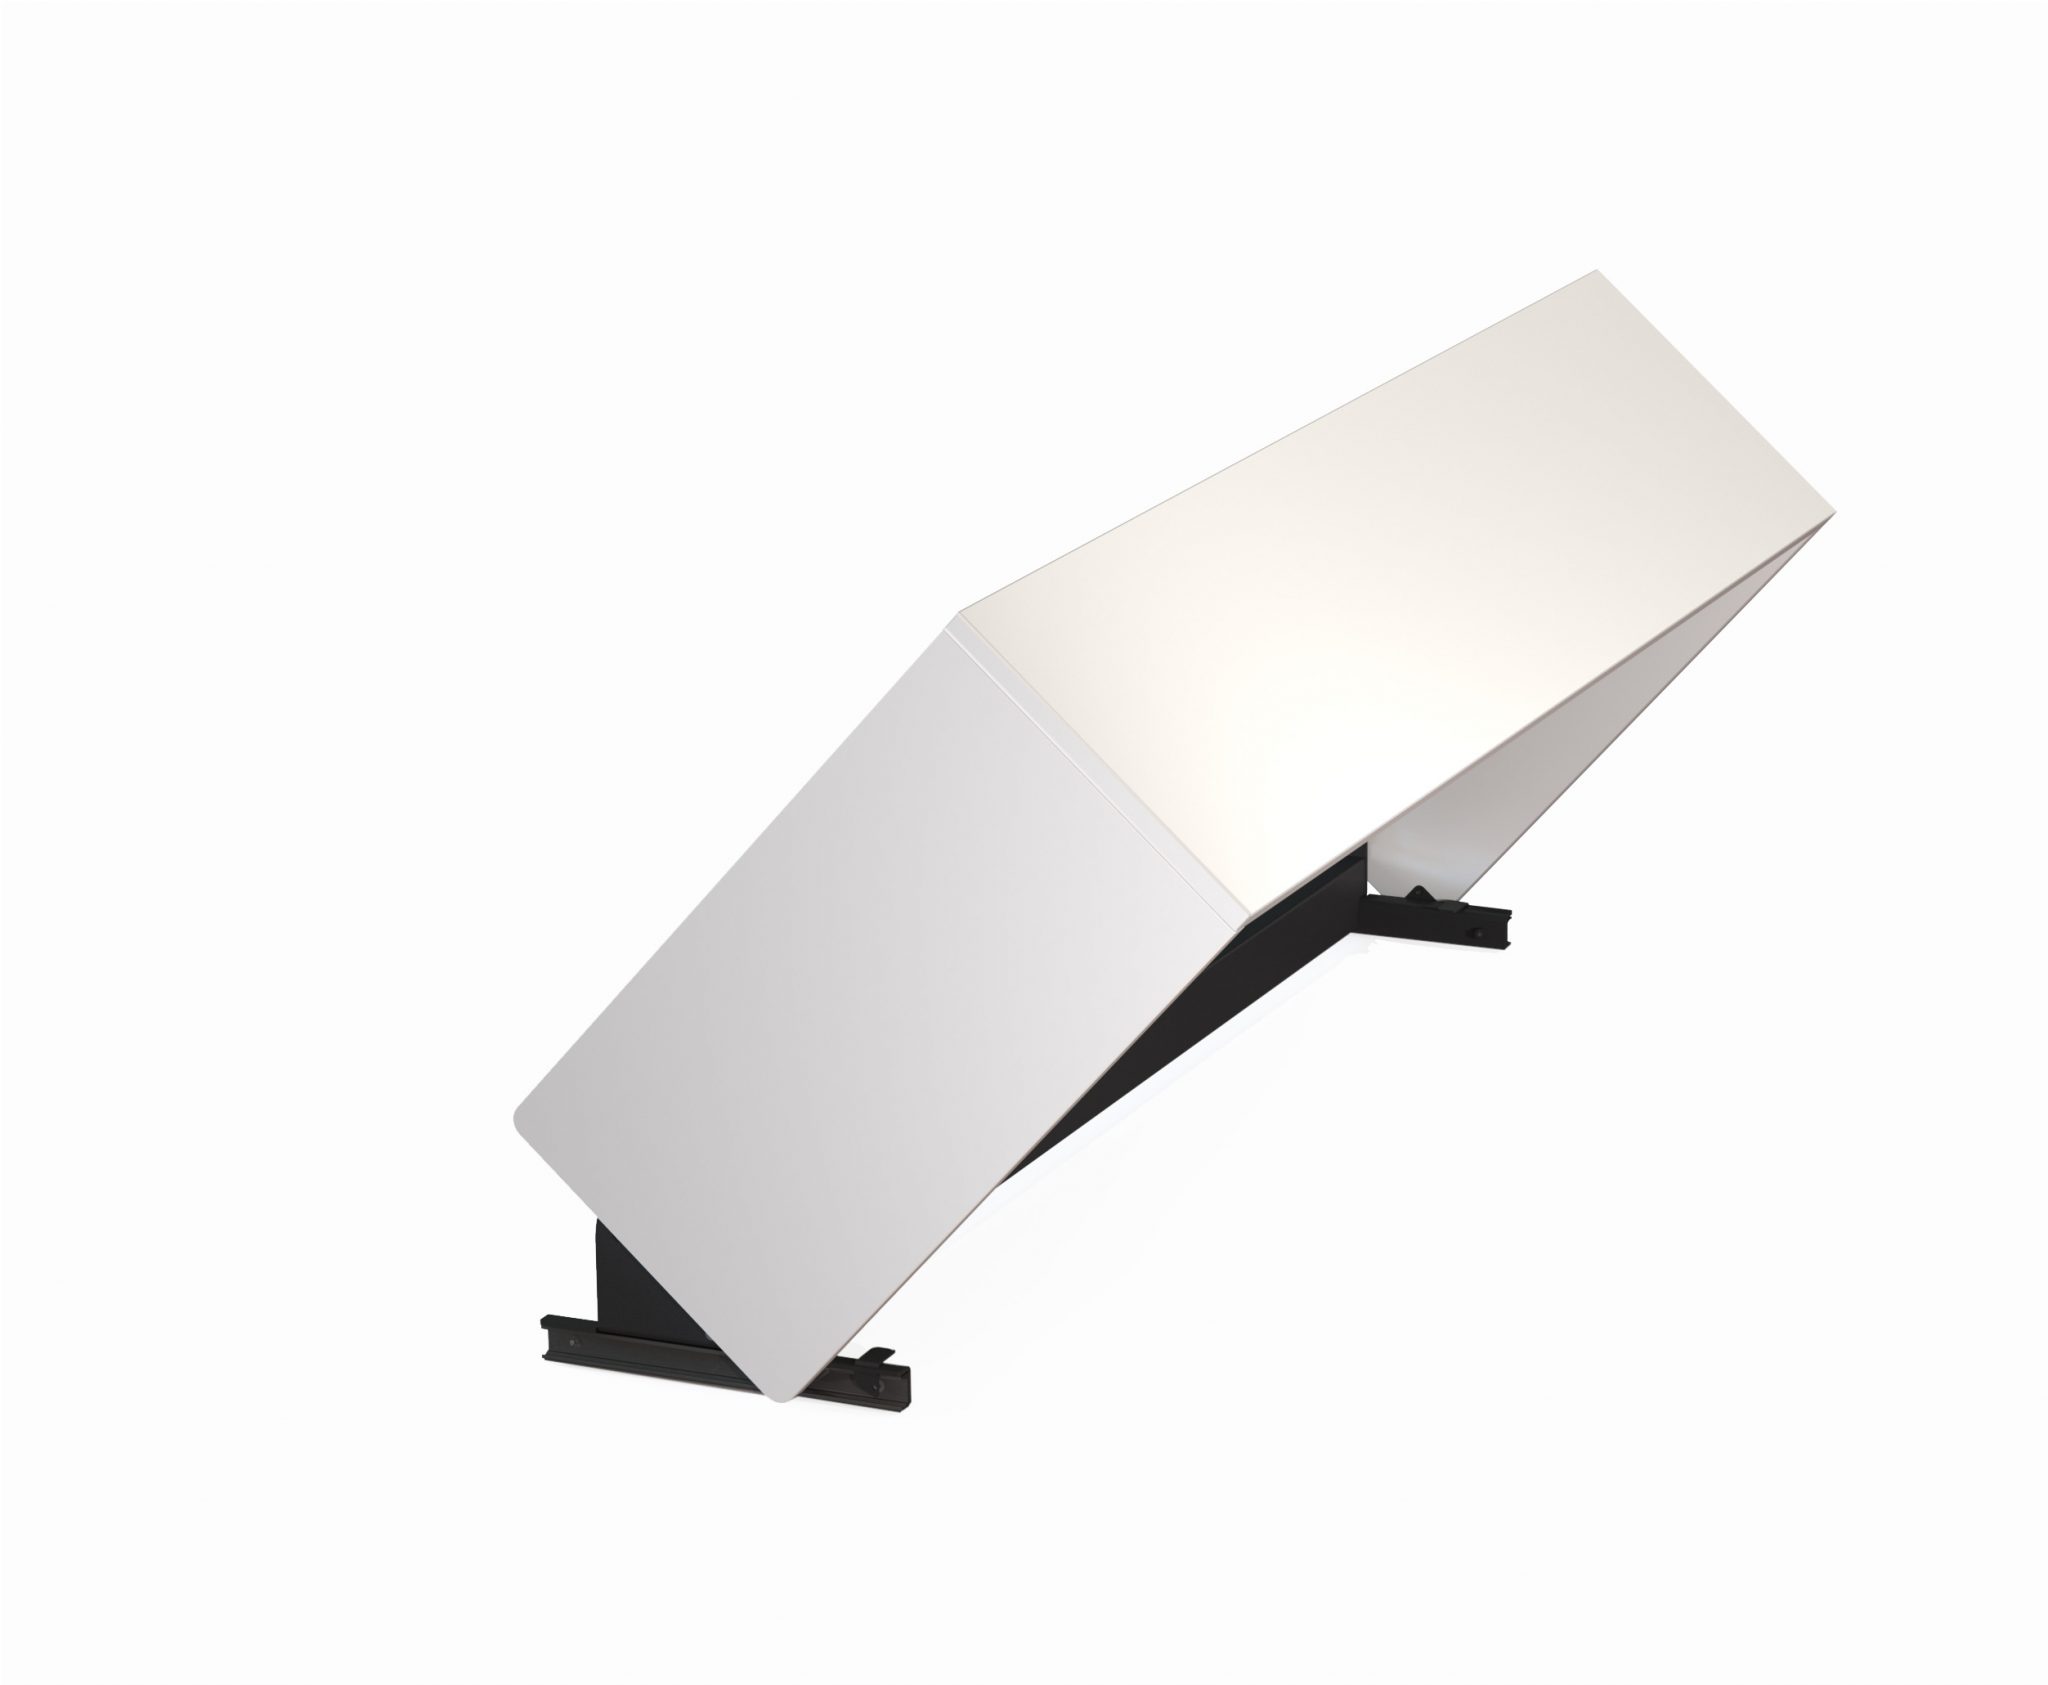 Tablebed Freestanding Single – White